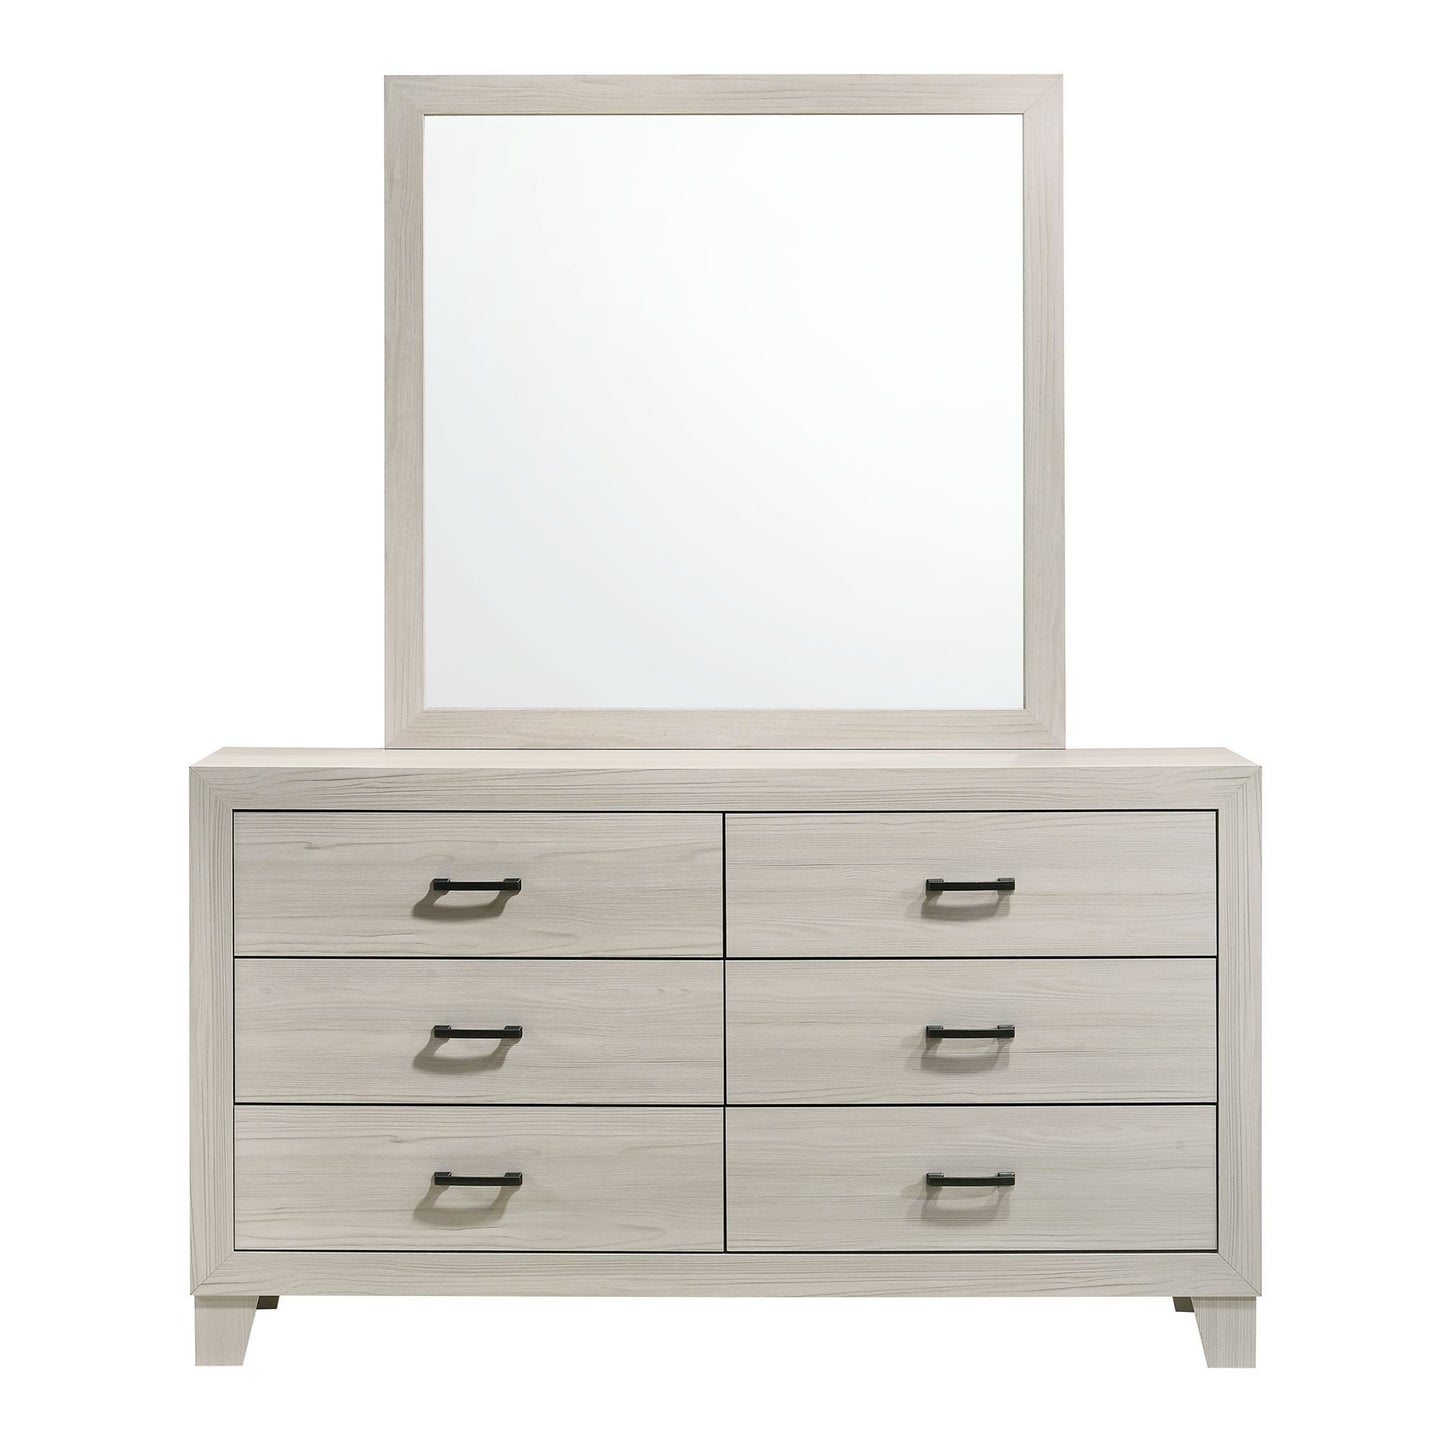 Makayla - Dresser and Mirror - Natural